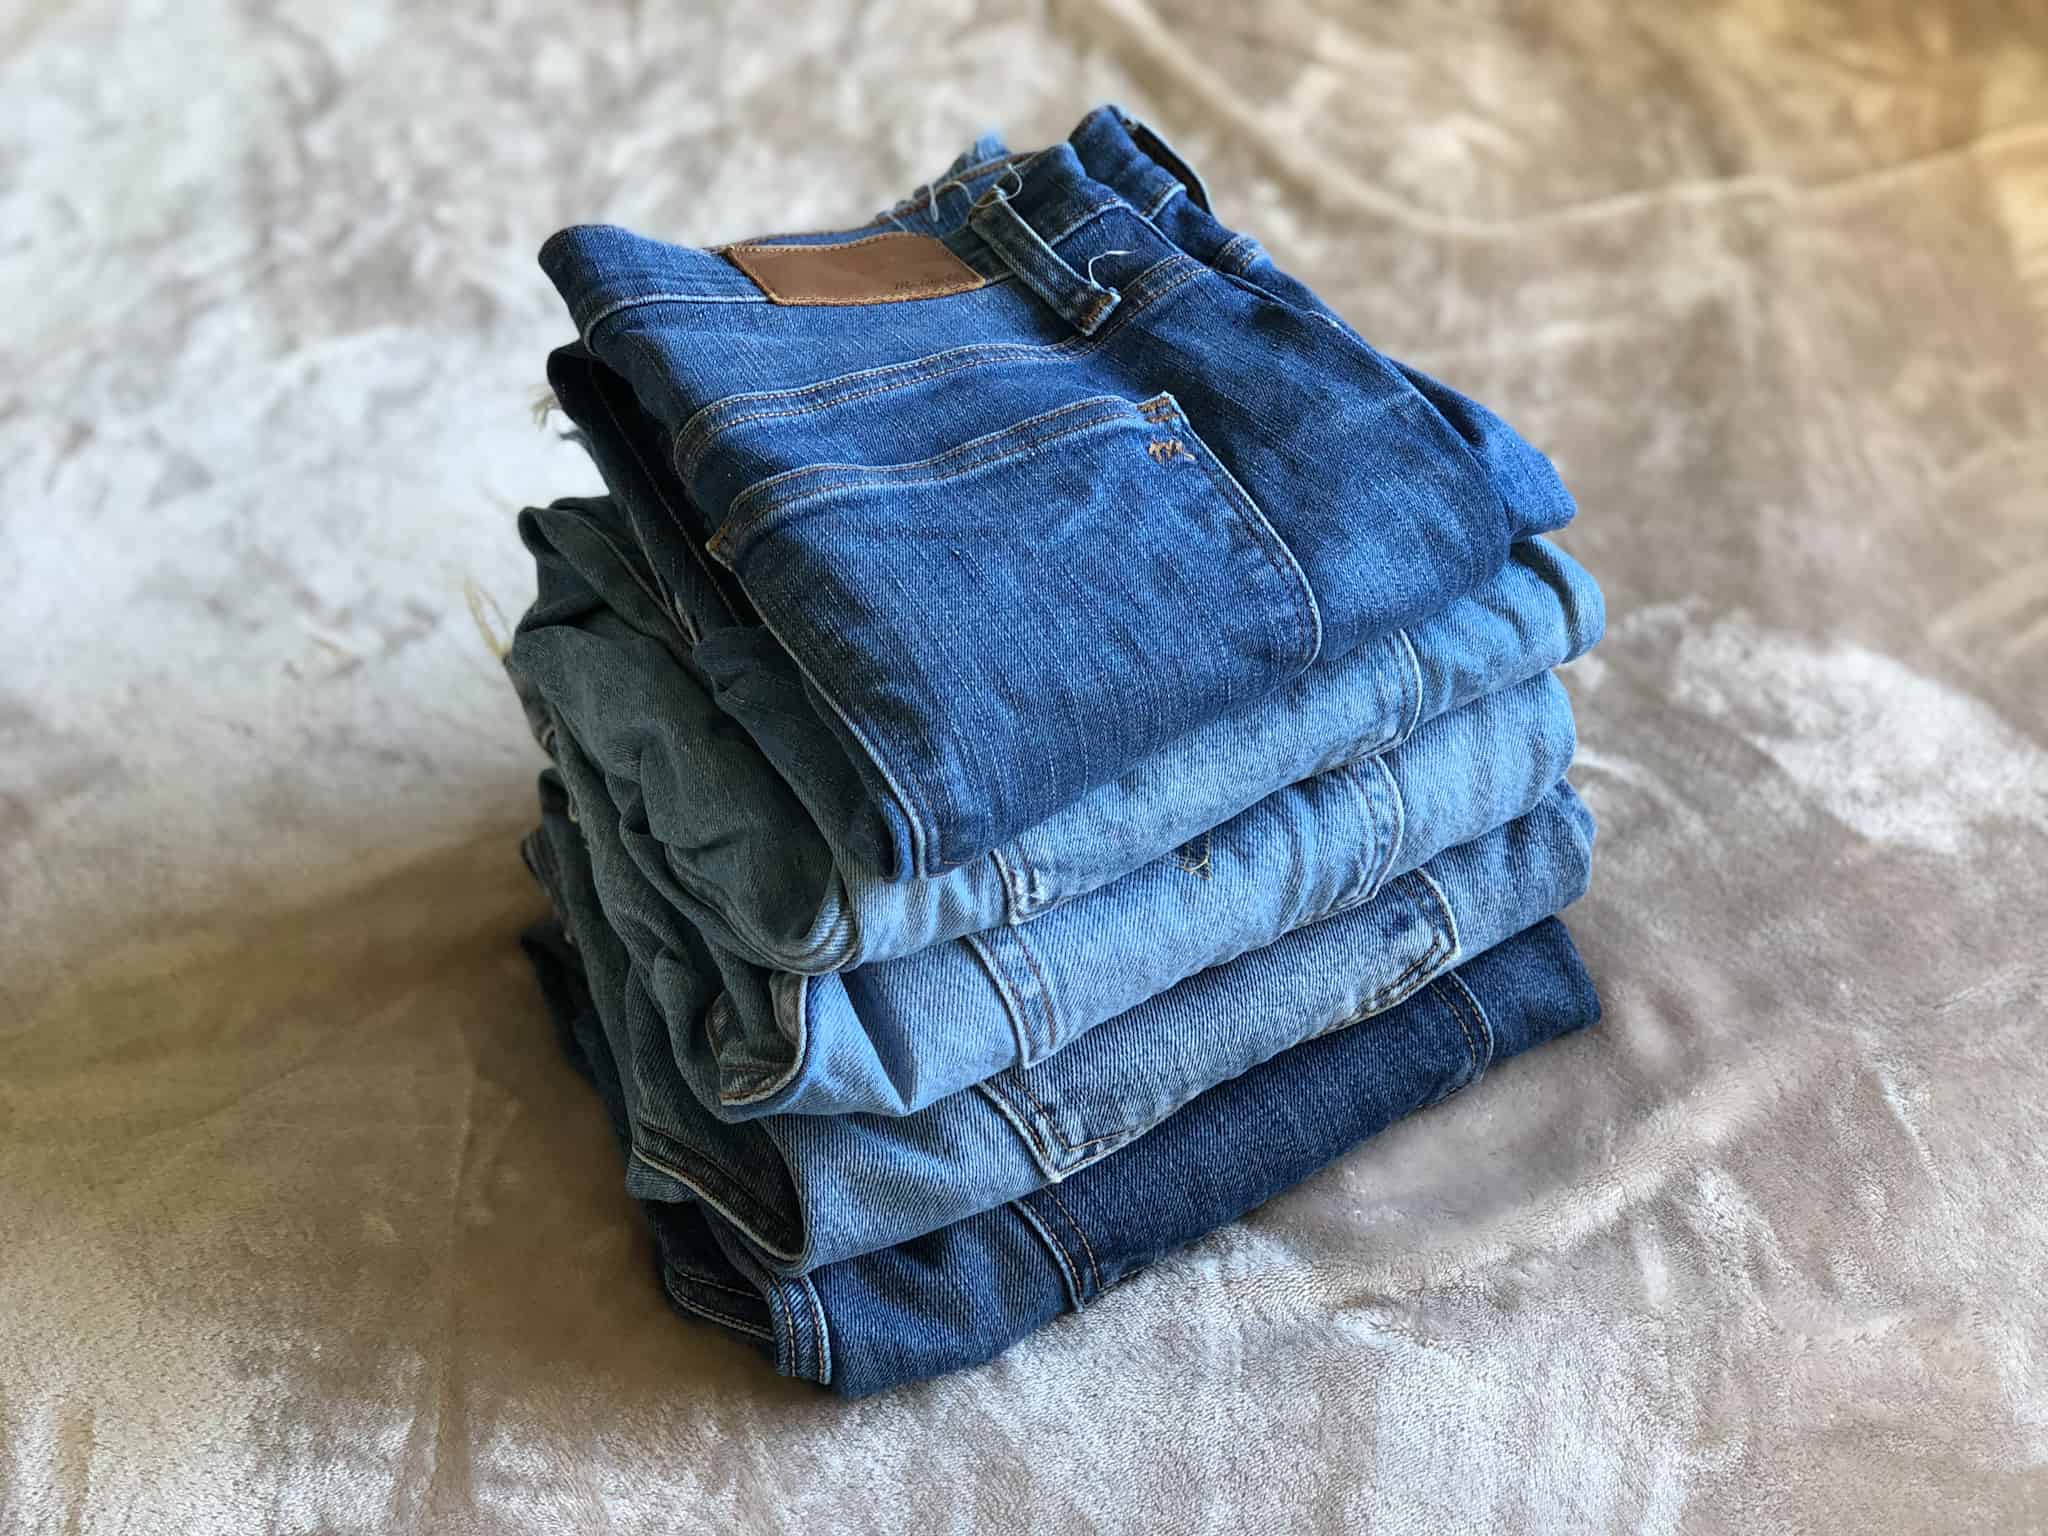 Jeans For Apple Shape